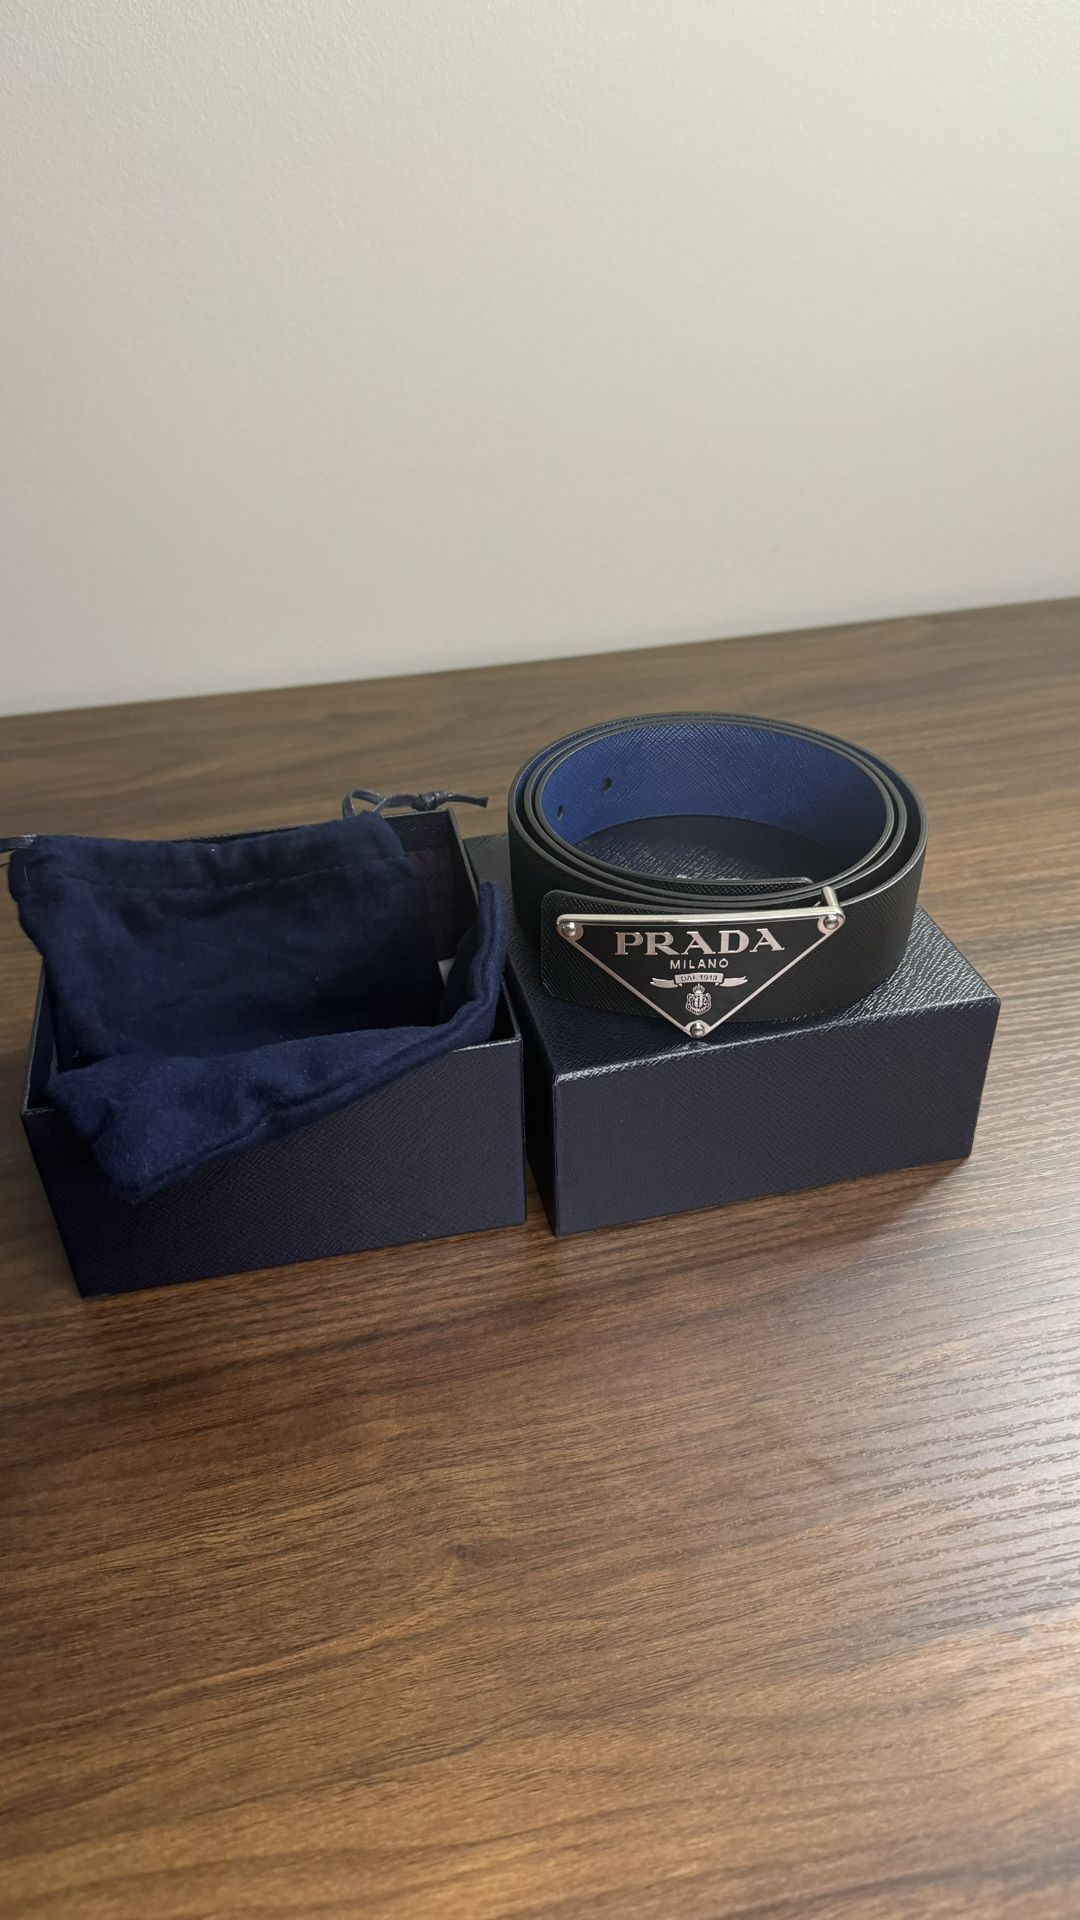 Prada Saffiano Belt Black/Blue Reversible Leather And Enameled Buckle